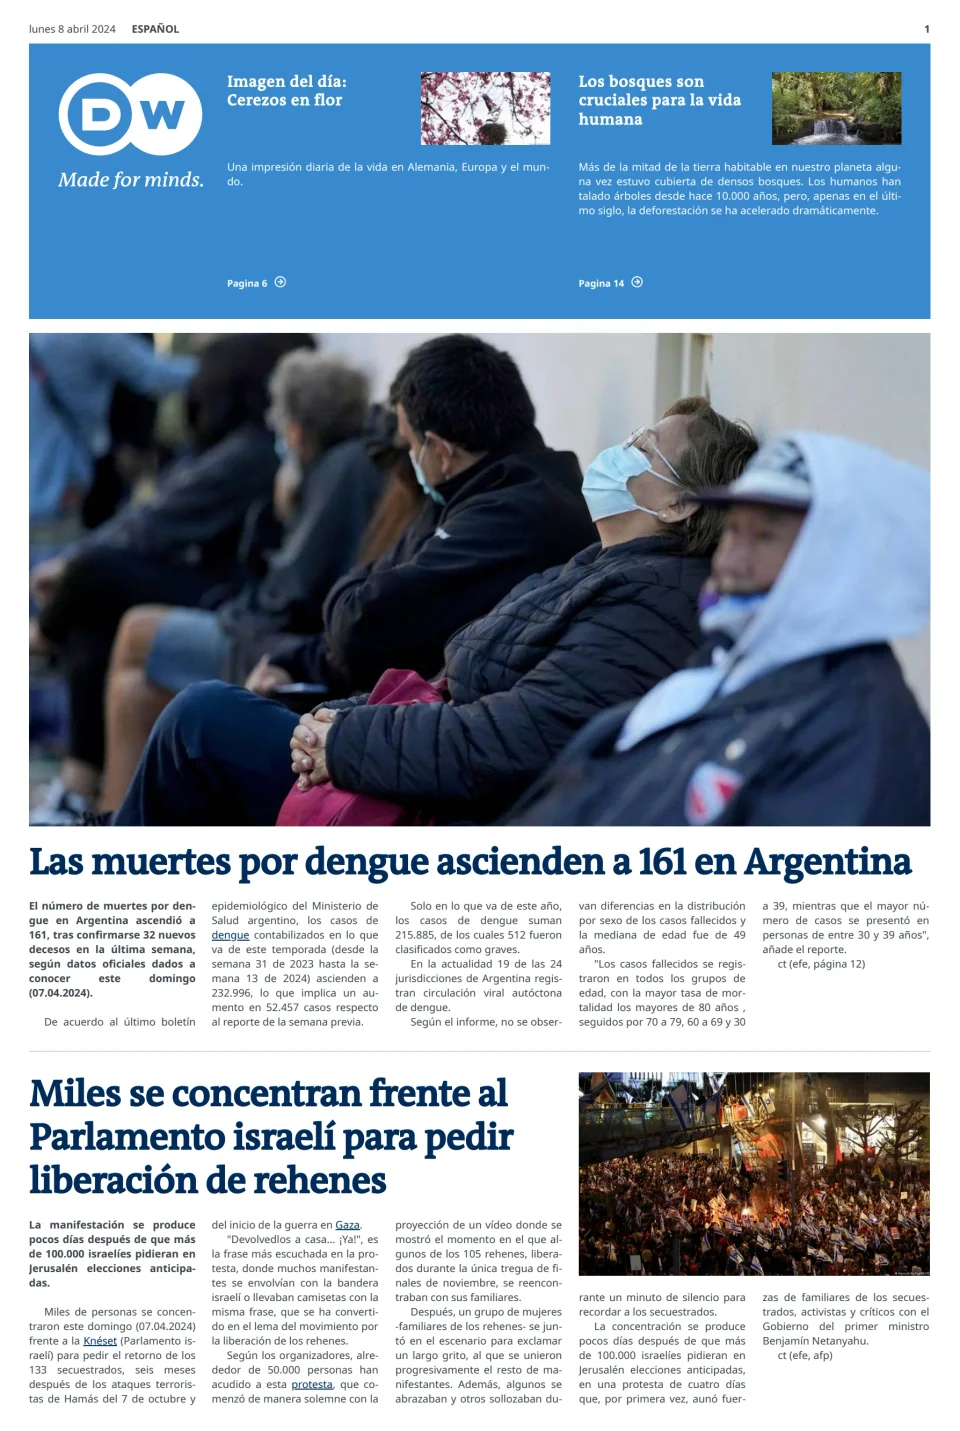 Deutsche Welle (Edición en español)